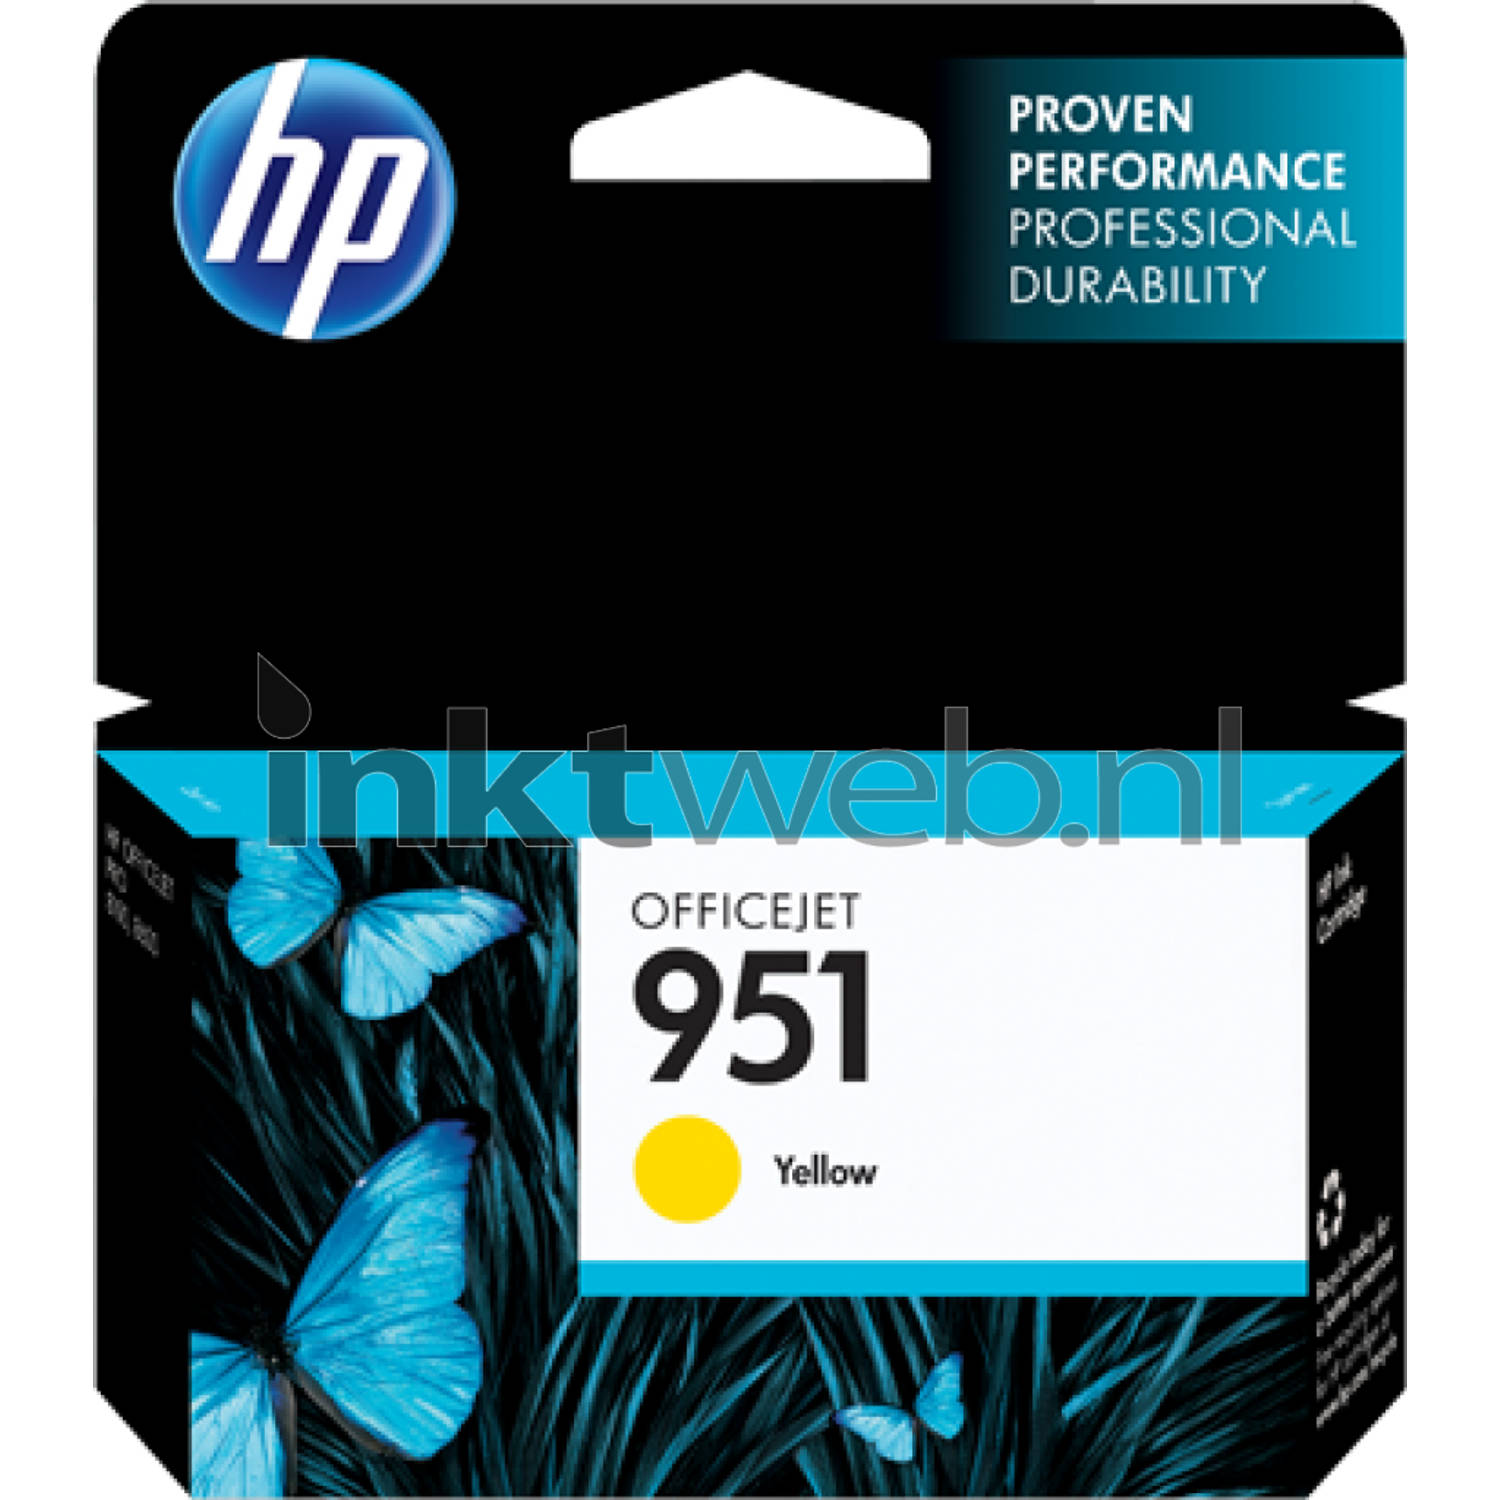 HP 951 Yellow Officejet Ink Cartridge (CN052AE#BGX)